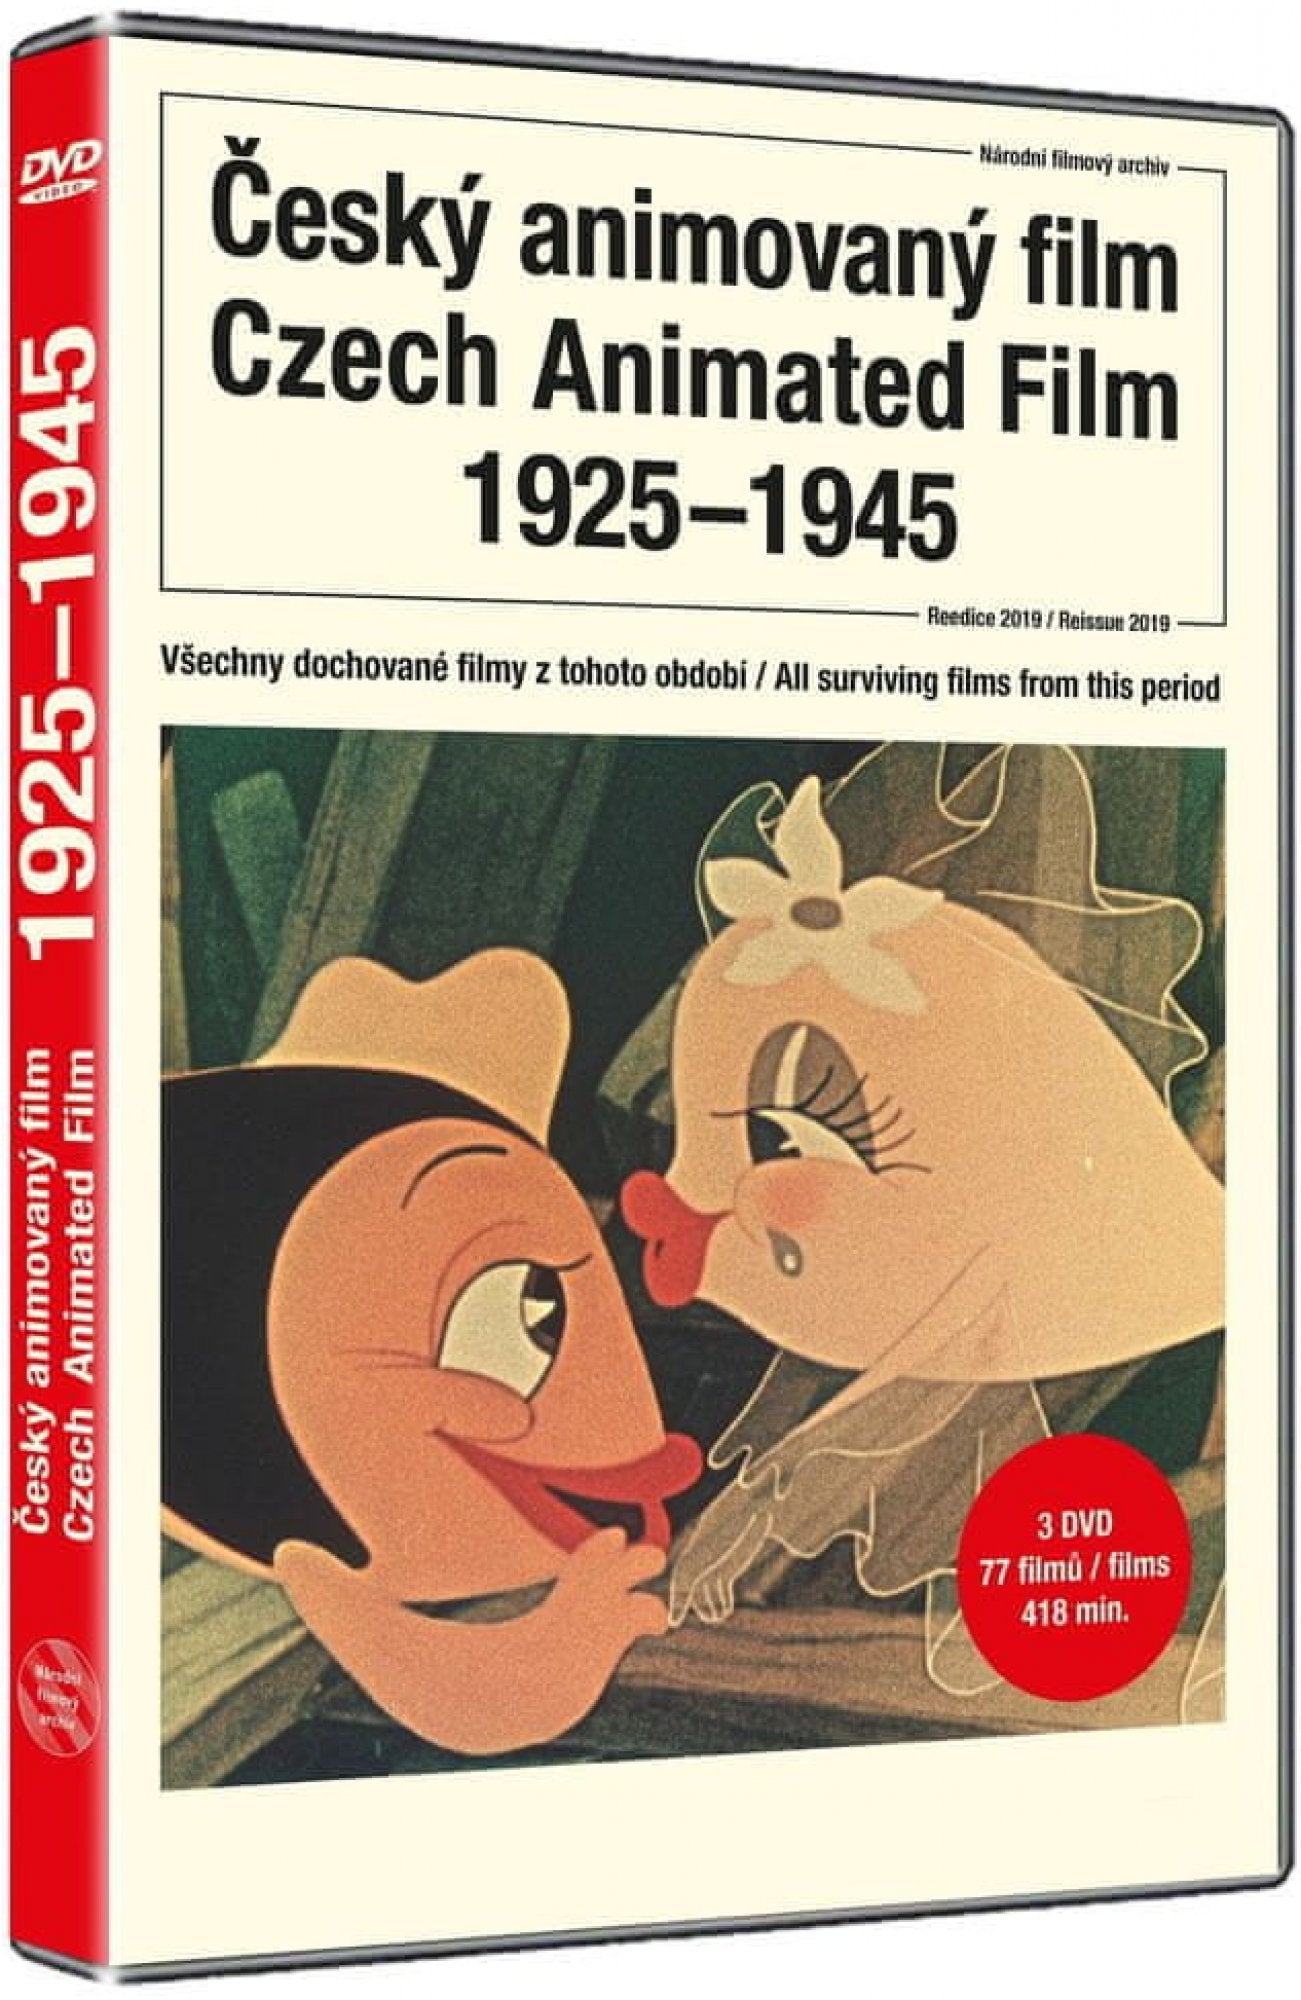 Czech Animated Film / Cesky animovany film 1925-1945 DVD